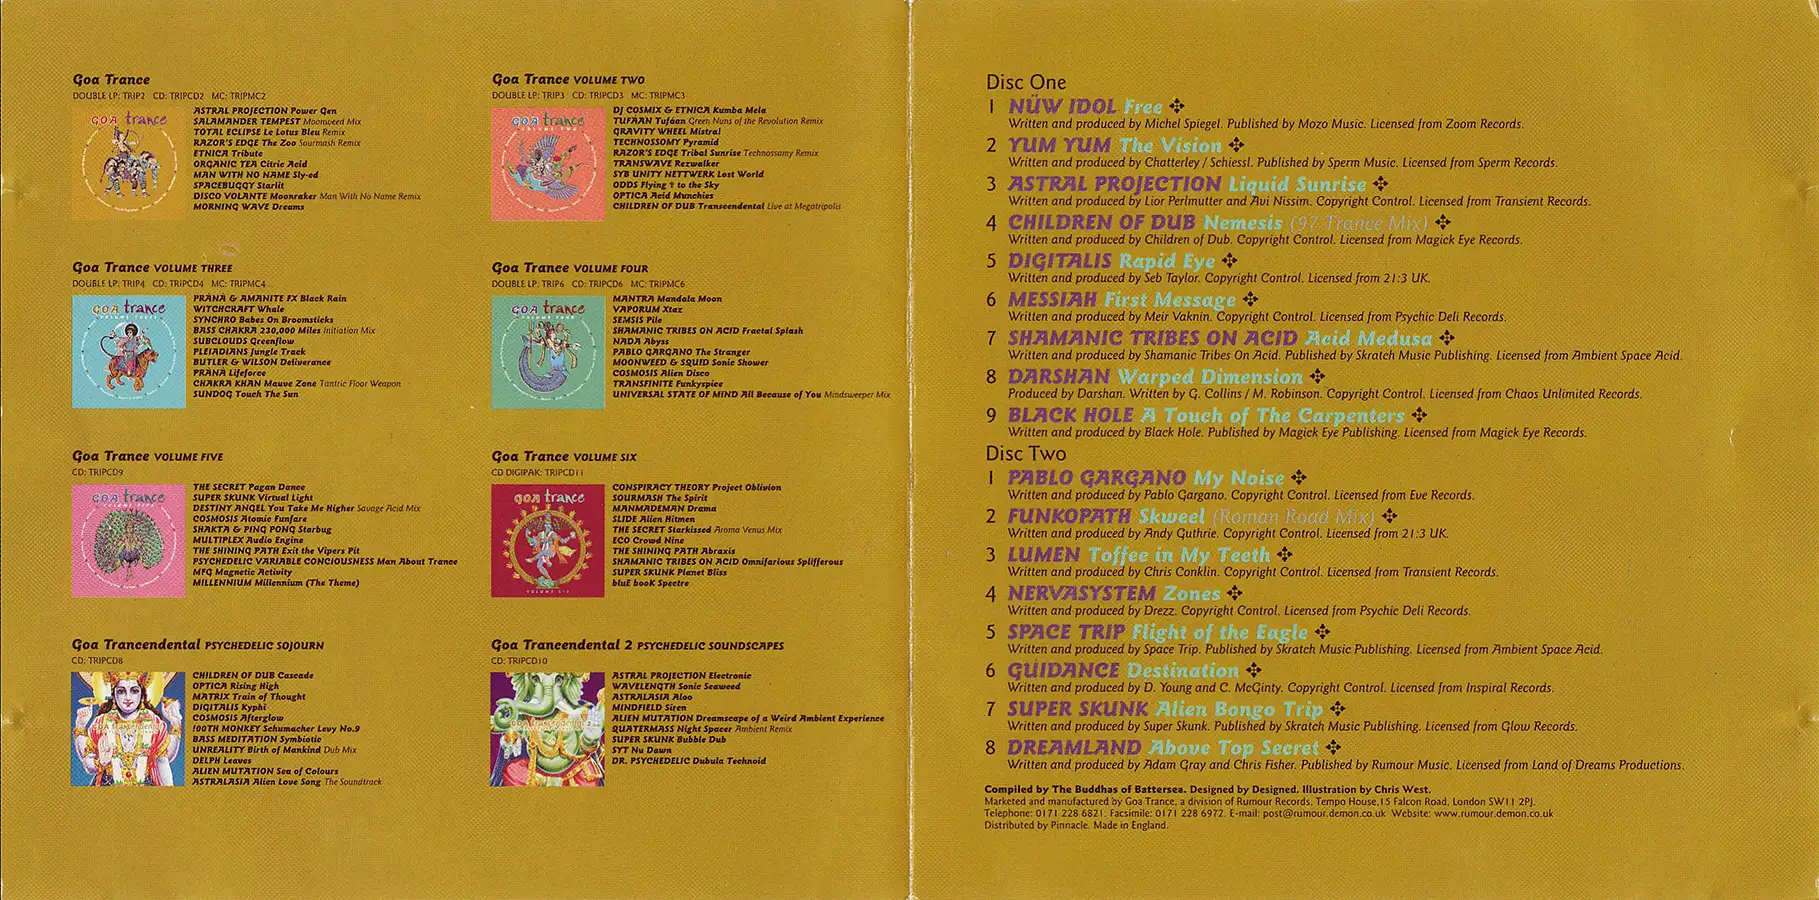 Goa Trance 7 compilation, CD from 1997 at PsyDB